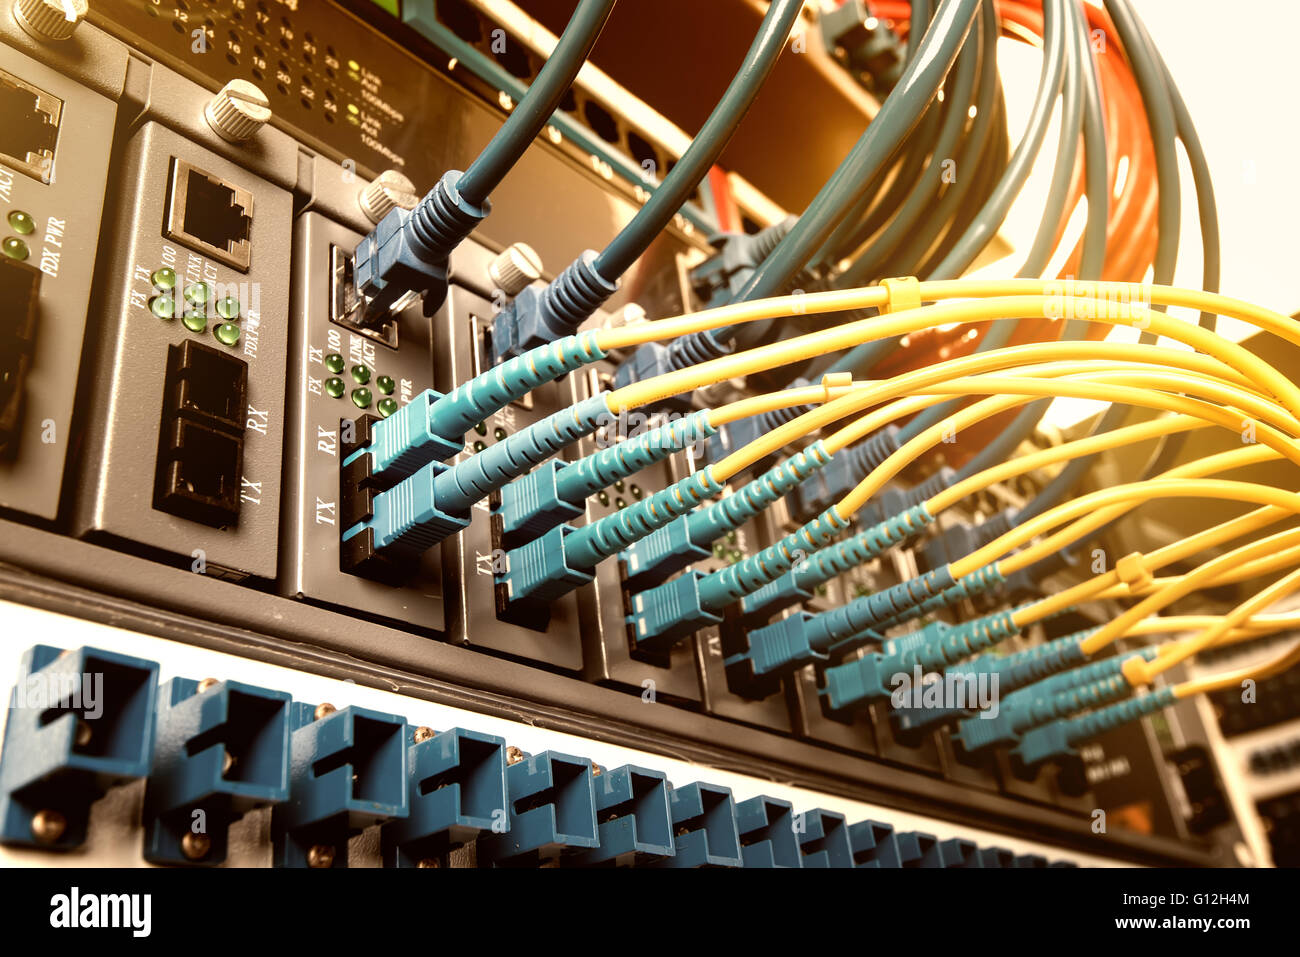 fiber optic servers and hardwares in an internet data center Stock Photo